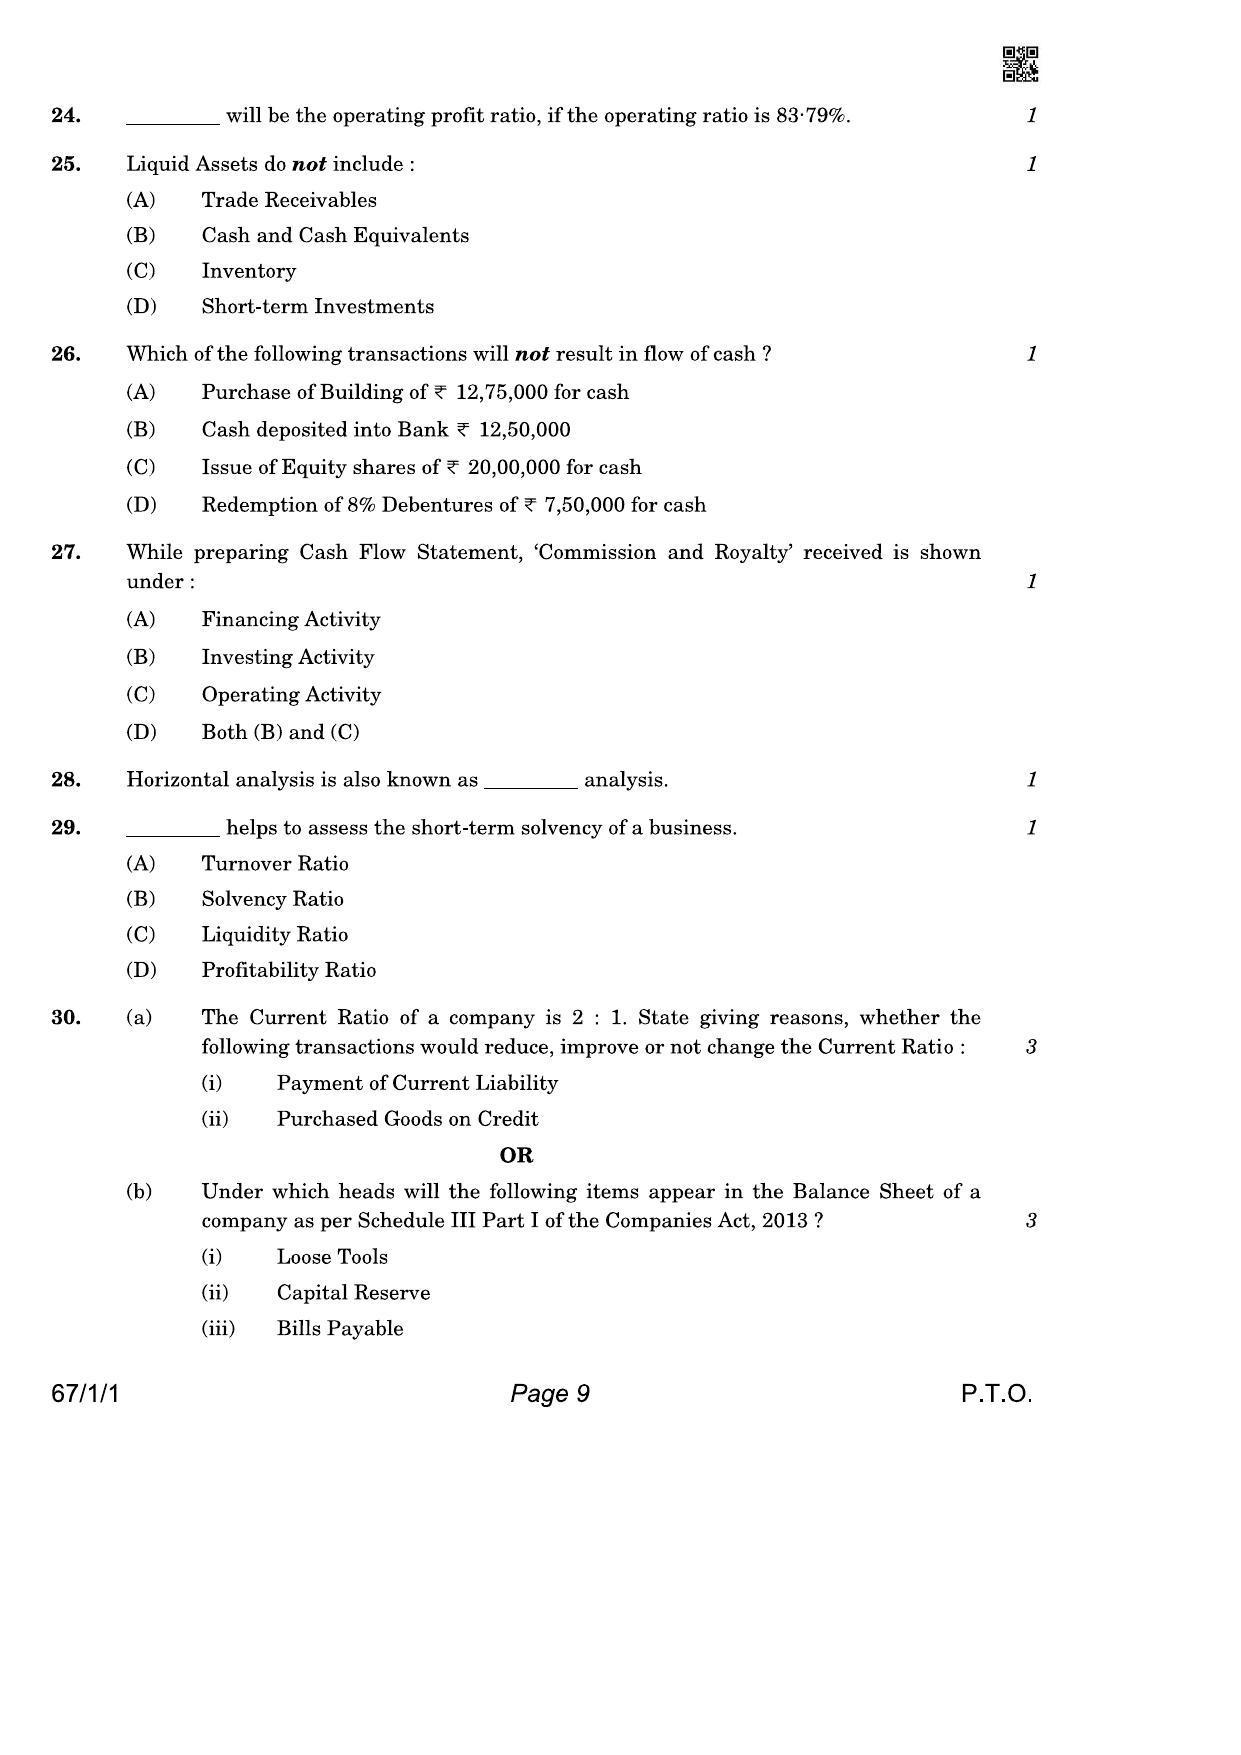 CBSE Class 12 QP_055_Accountancy 2021 Compartment Question Paper - Page 9